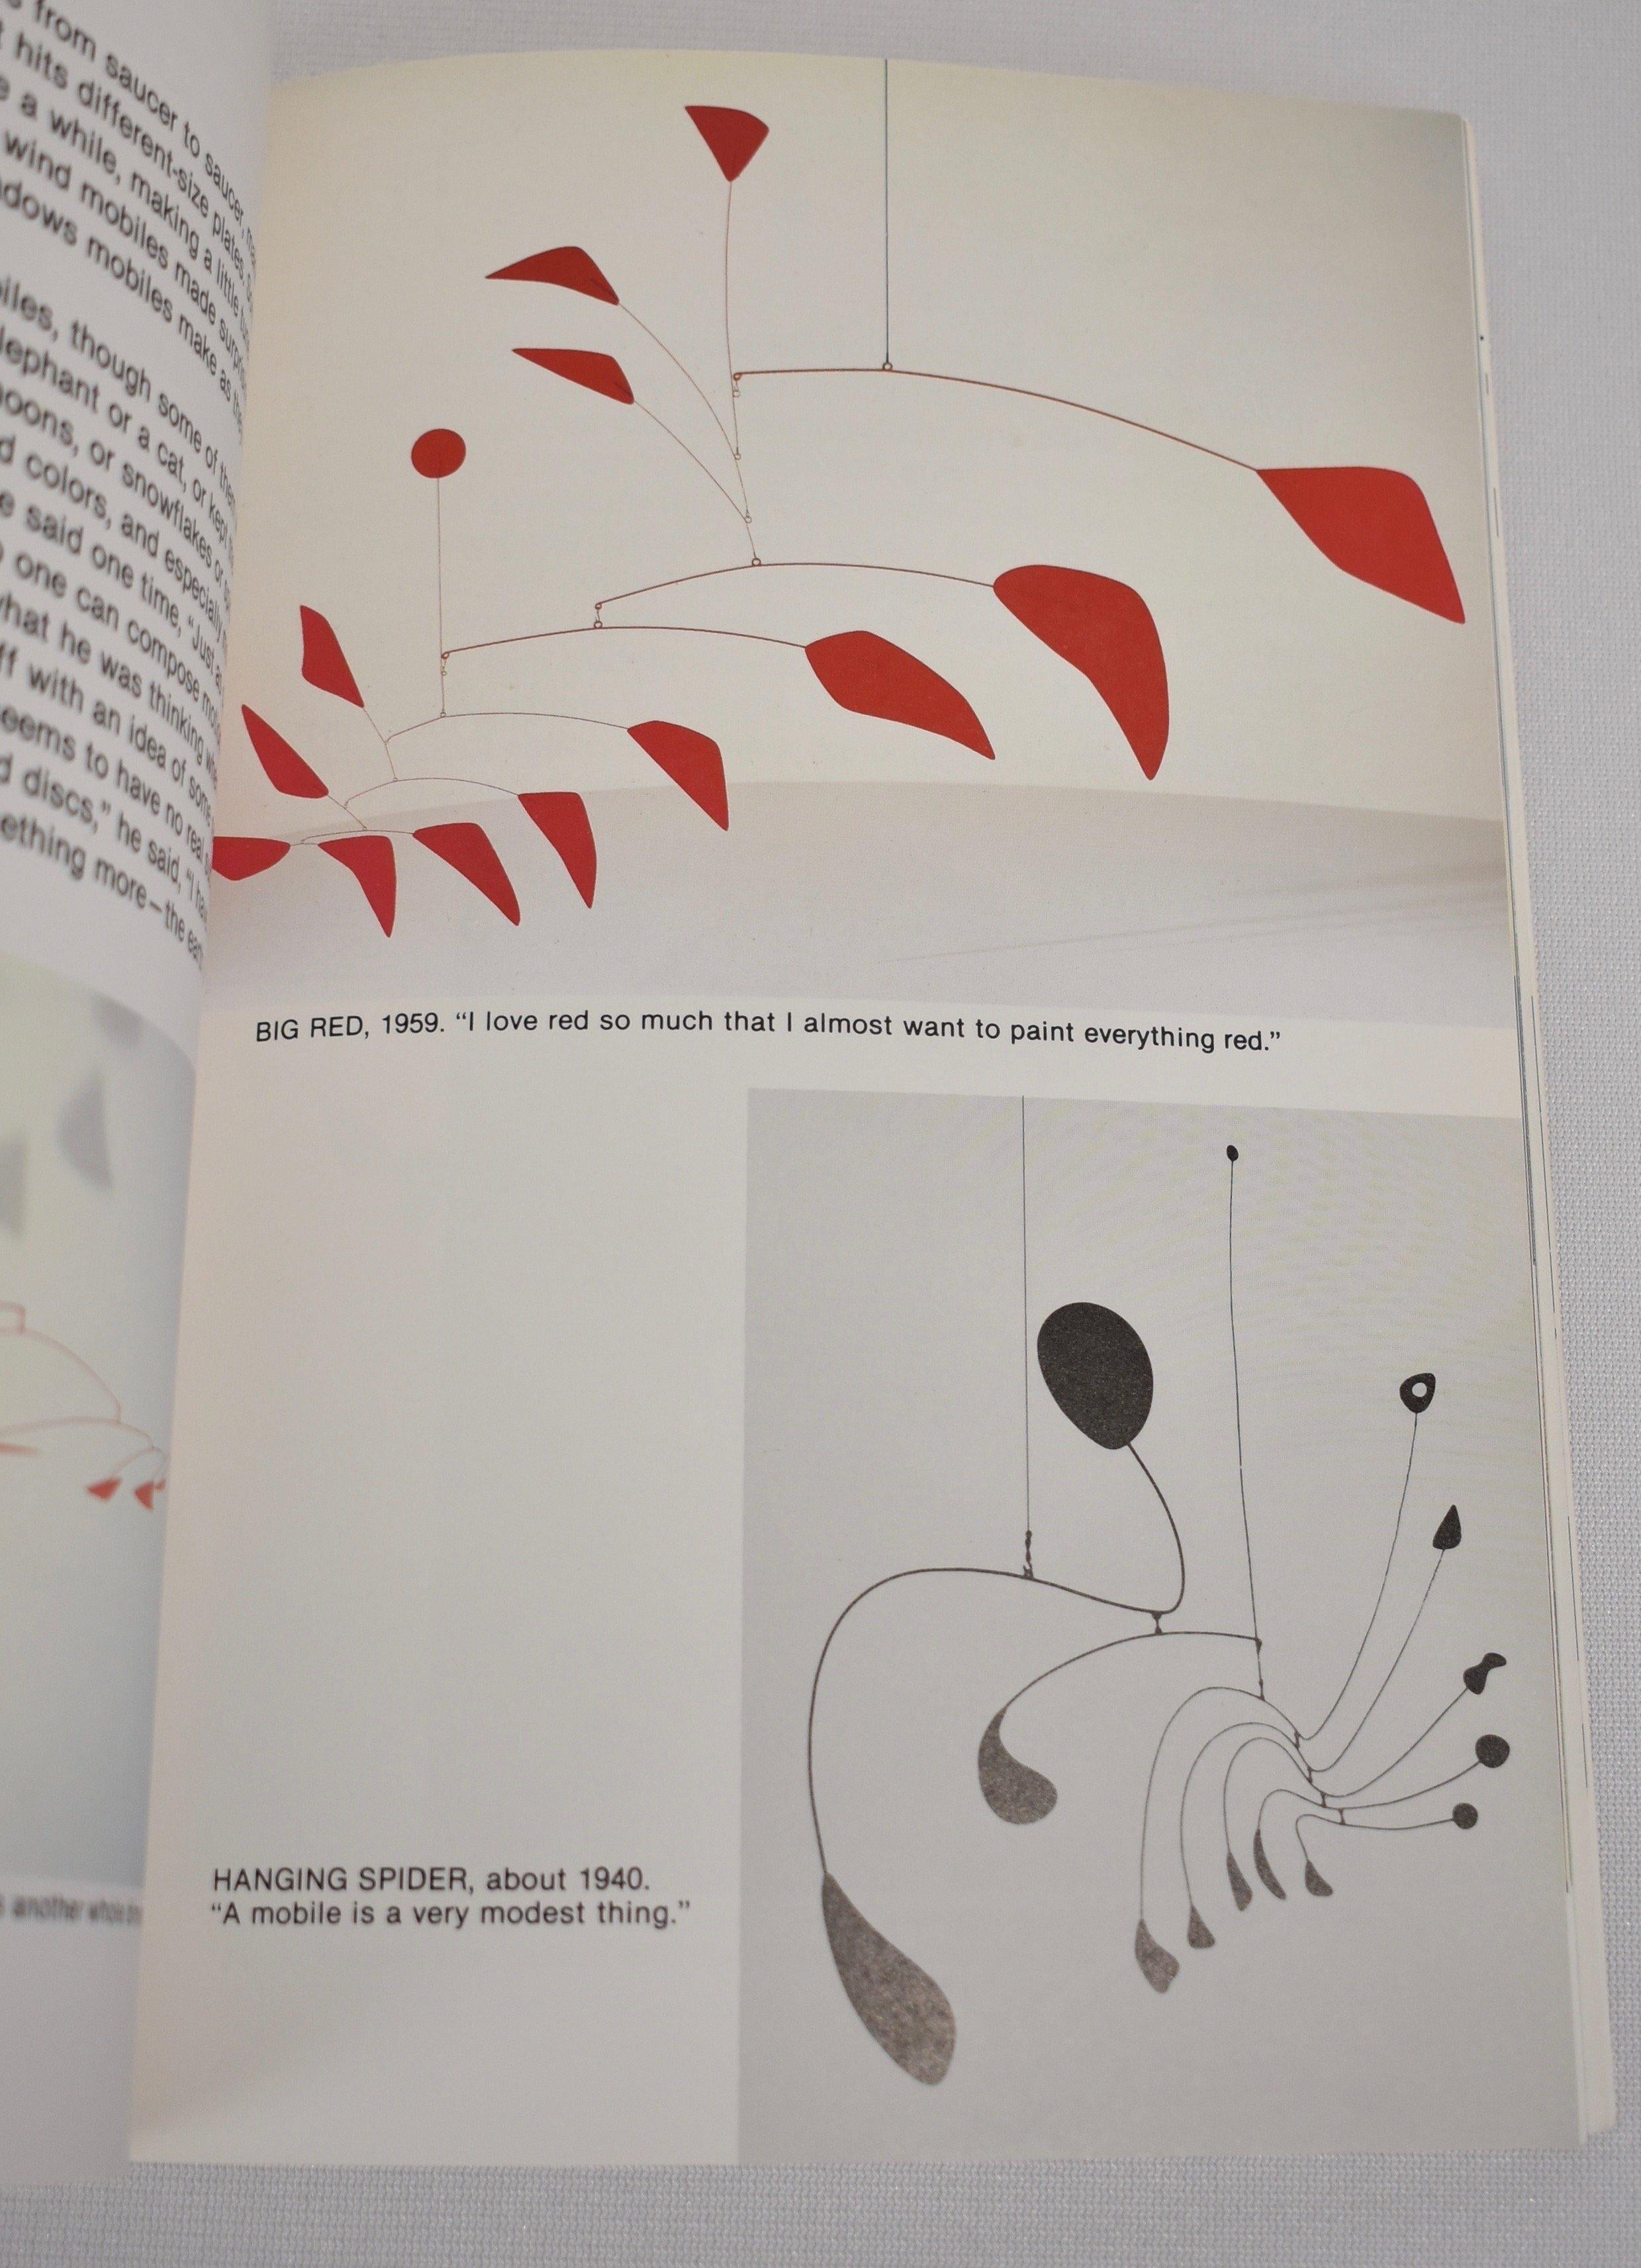 Paper Alexander Calder and His Magical Mobiles by Jean Lipman & Margaret Aspinwall